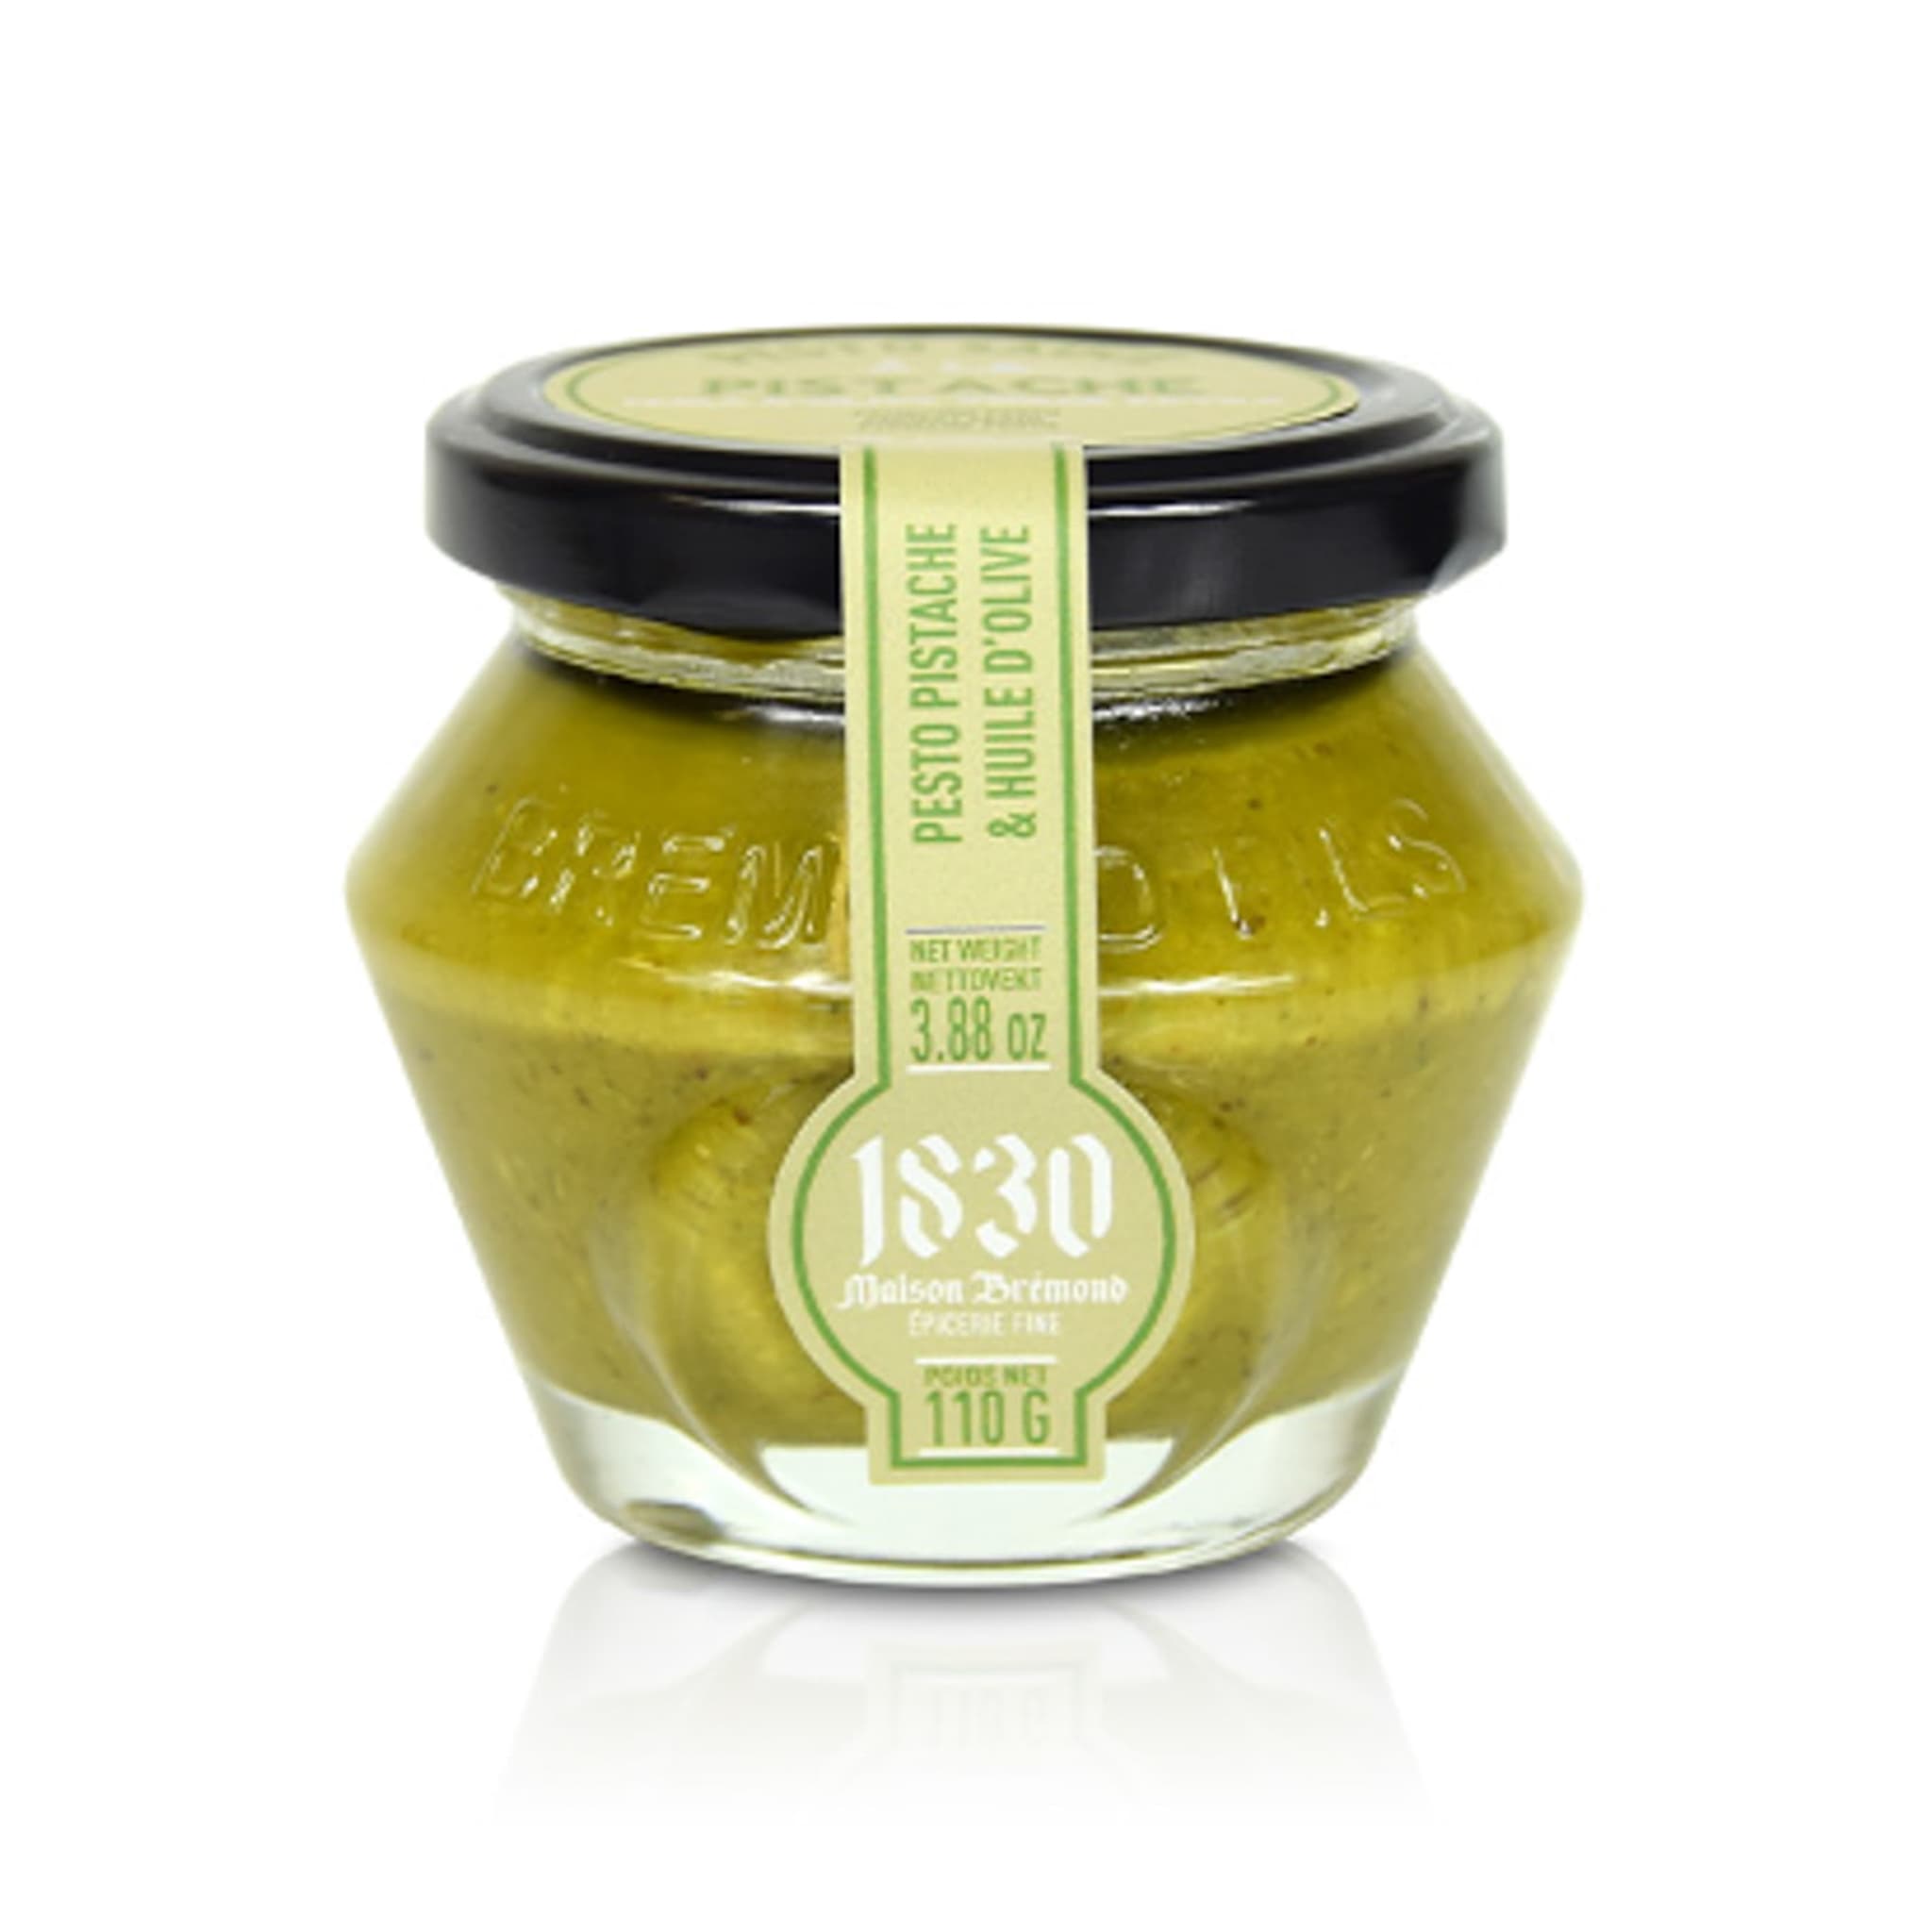 Maison Bremond Pistachio Pesto & Extra Virgin Olive Oil 110g